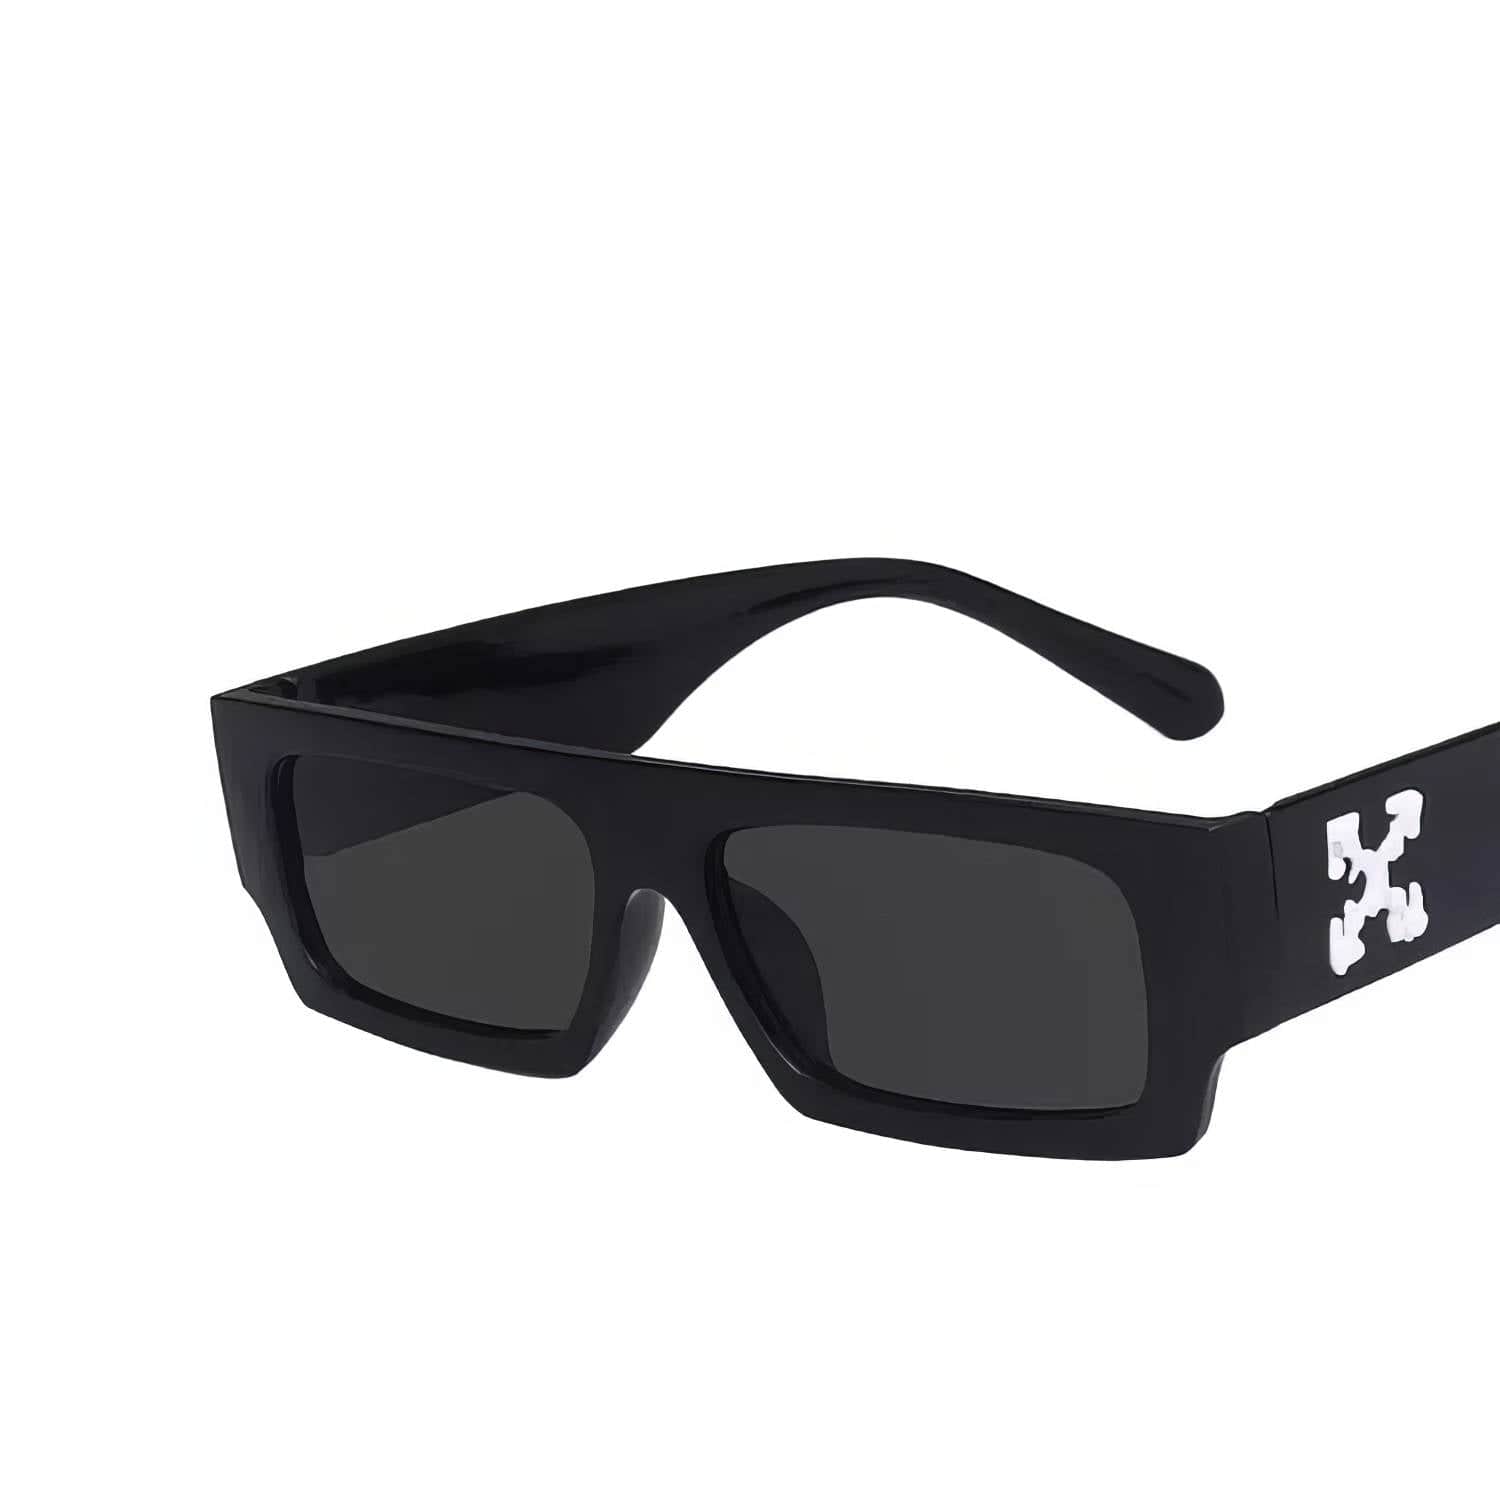 New Luxury Brand Rectangle Sunglasses Black / Resin